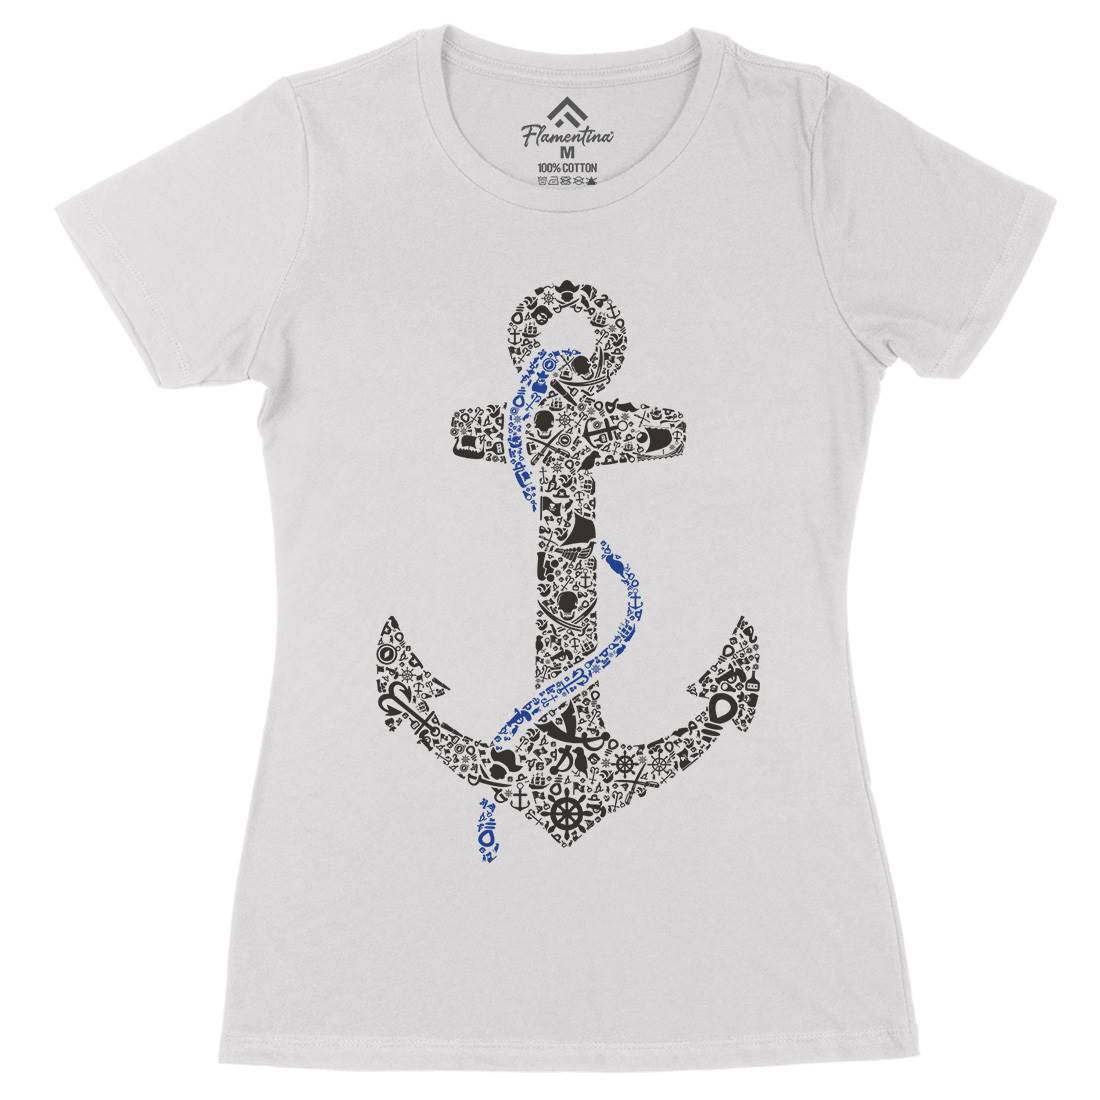 Anchor Womens Organic Crew Neck T-Shirt Navy B001